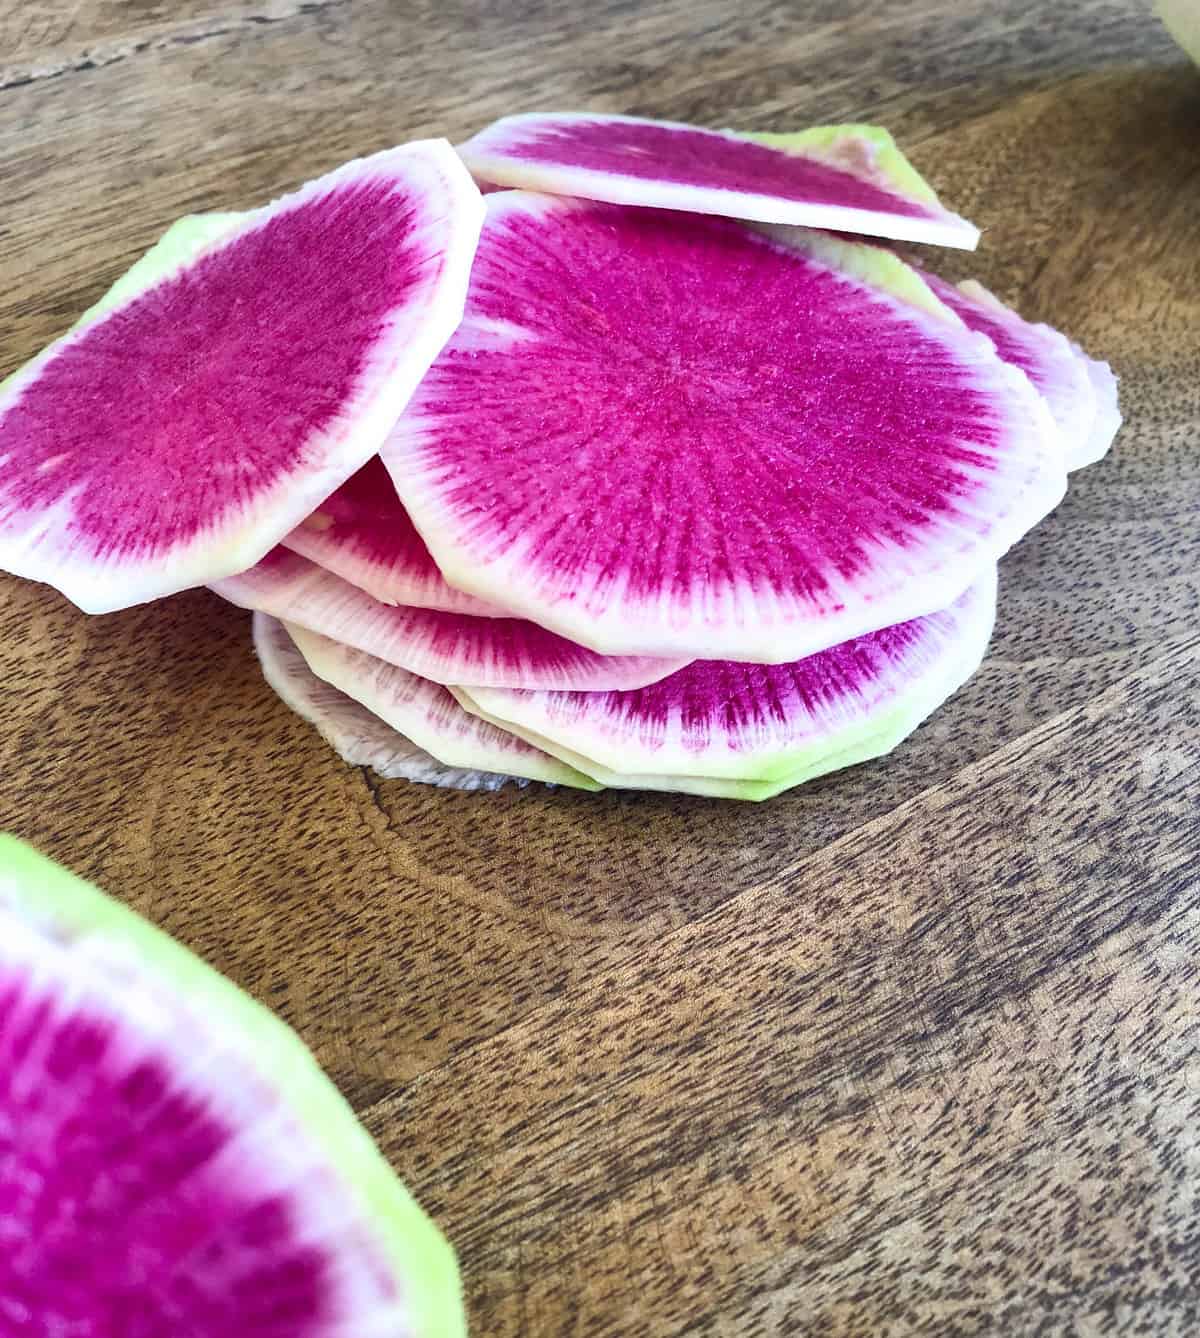 Sliced watermelon radish